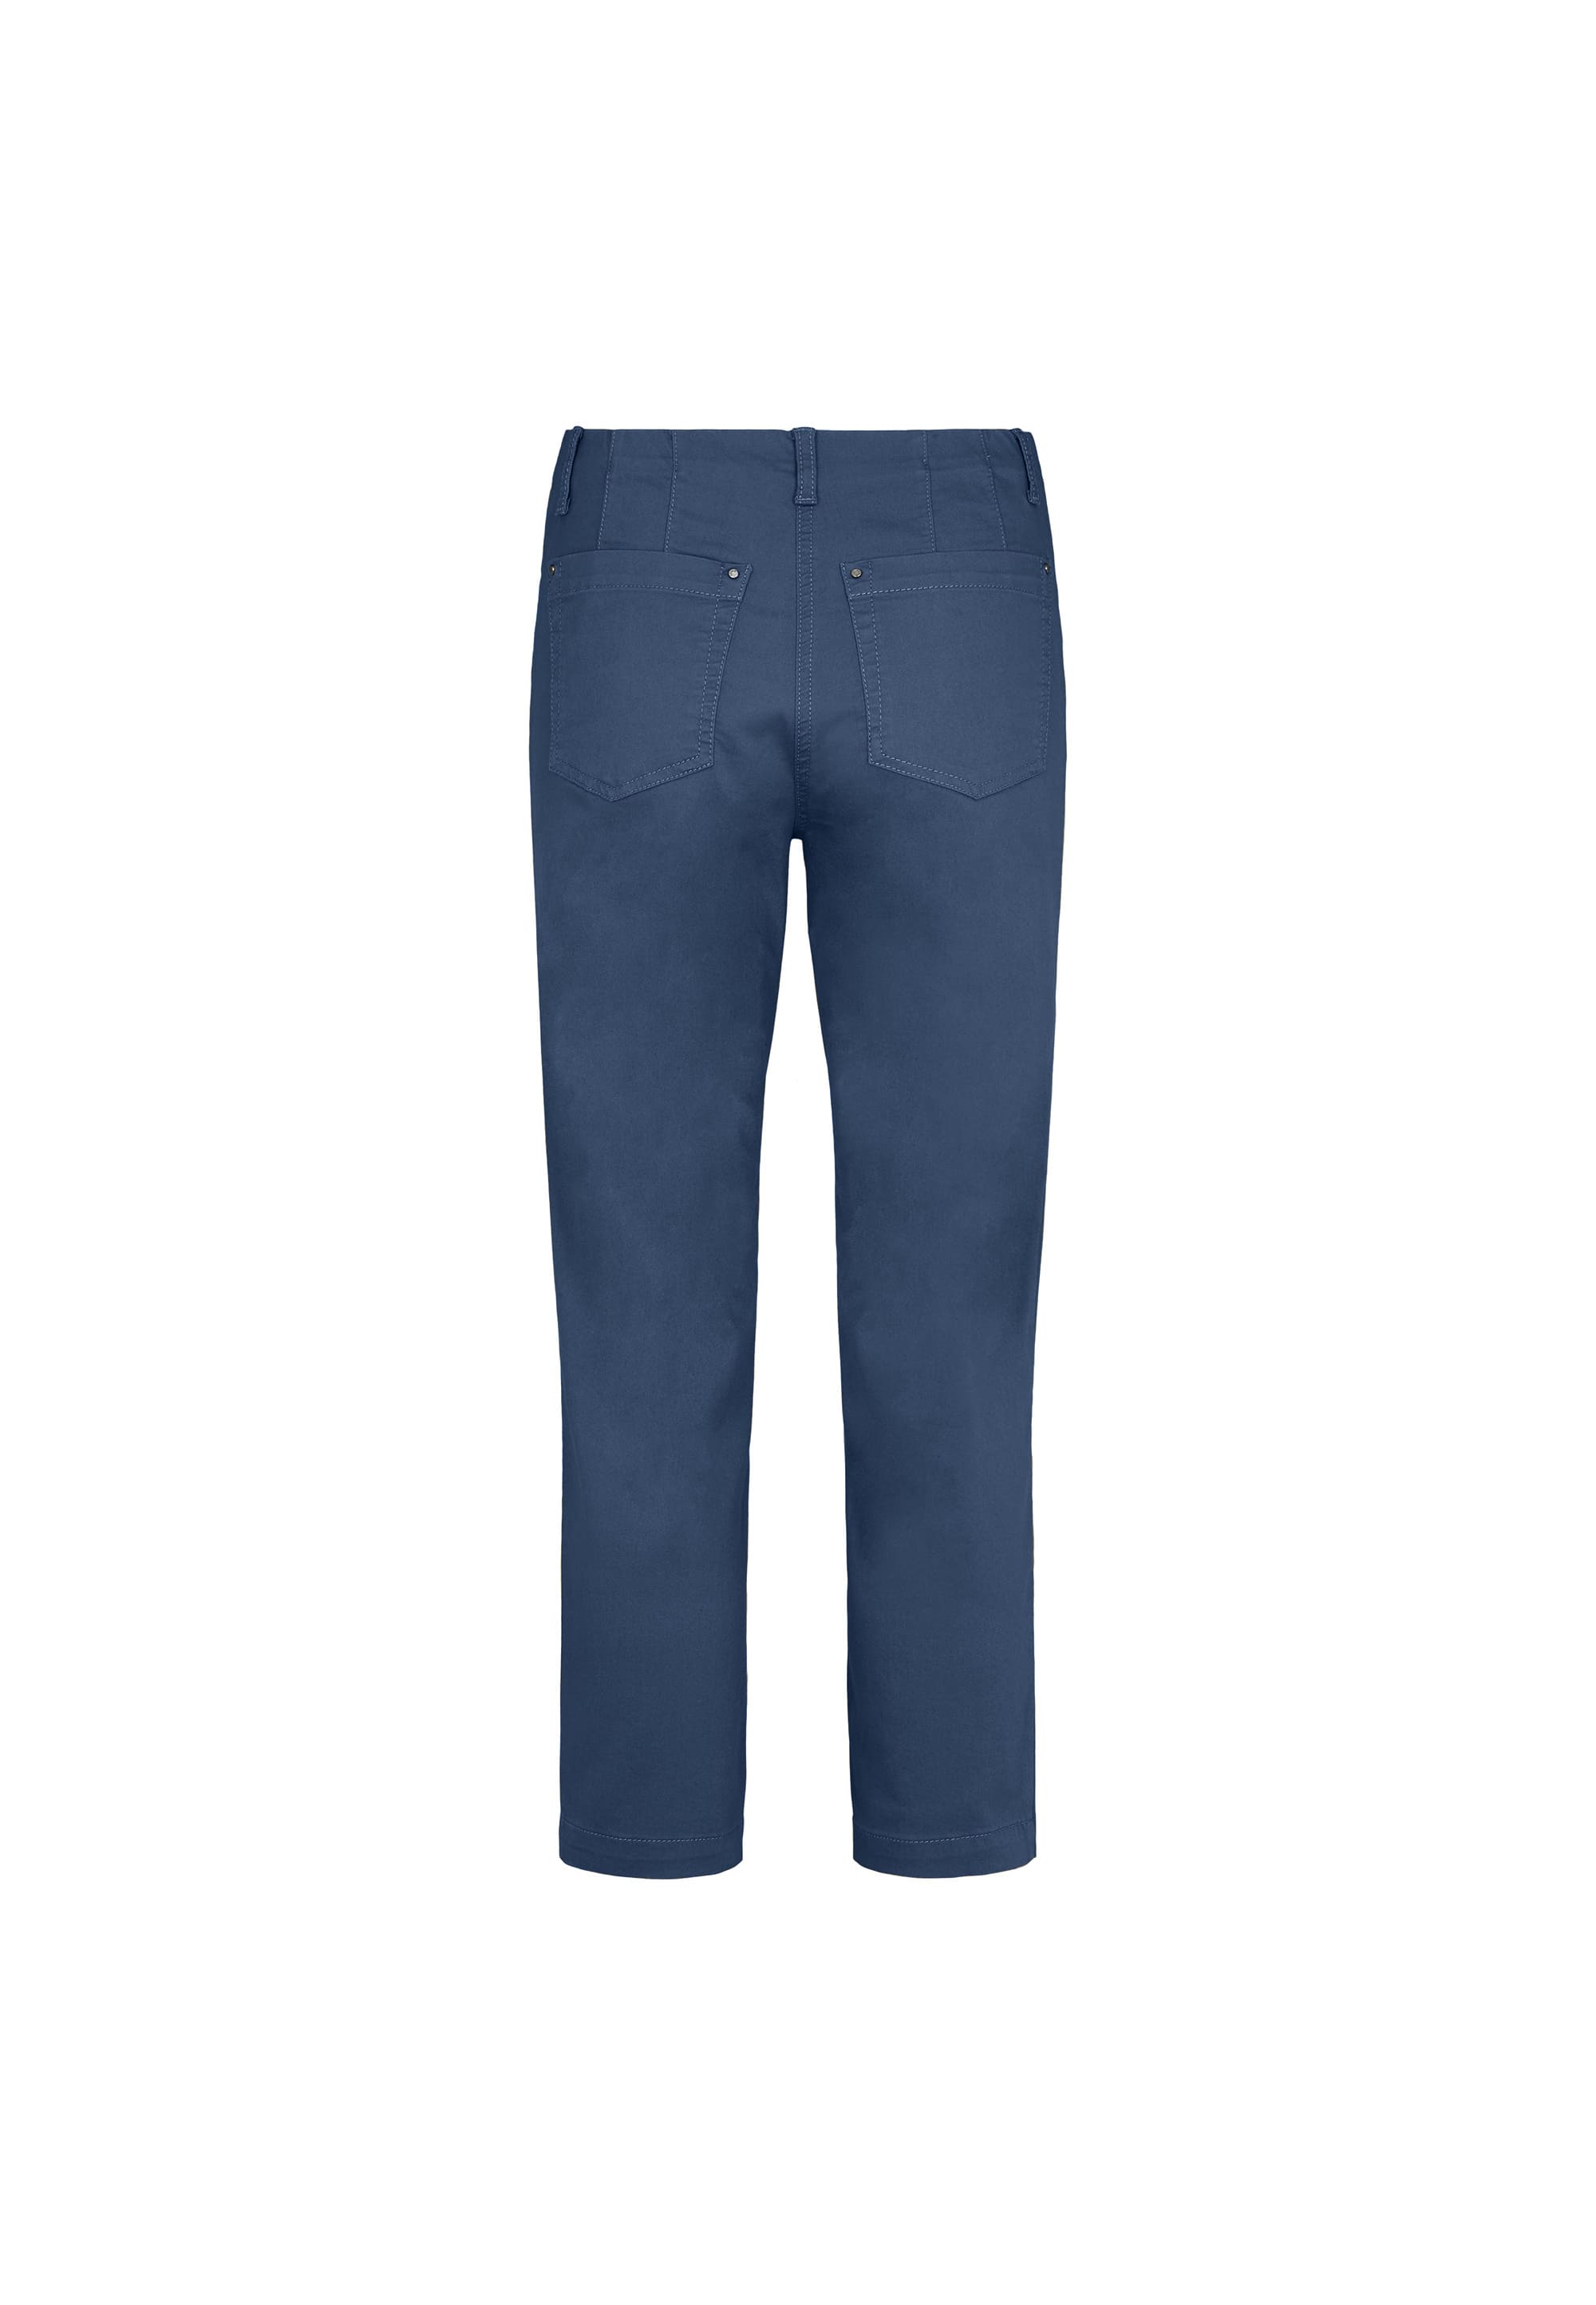 LAURIE Piper Regular Crop Trousers REGULAR 47000 Nordic Blue